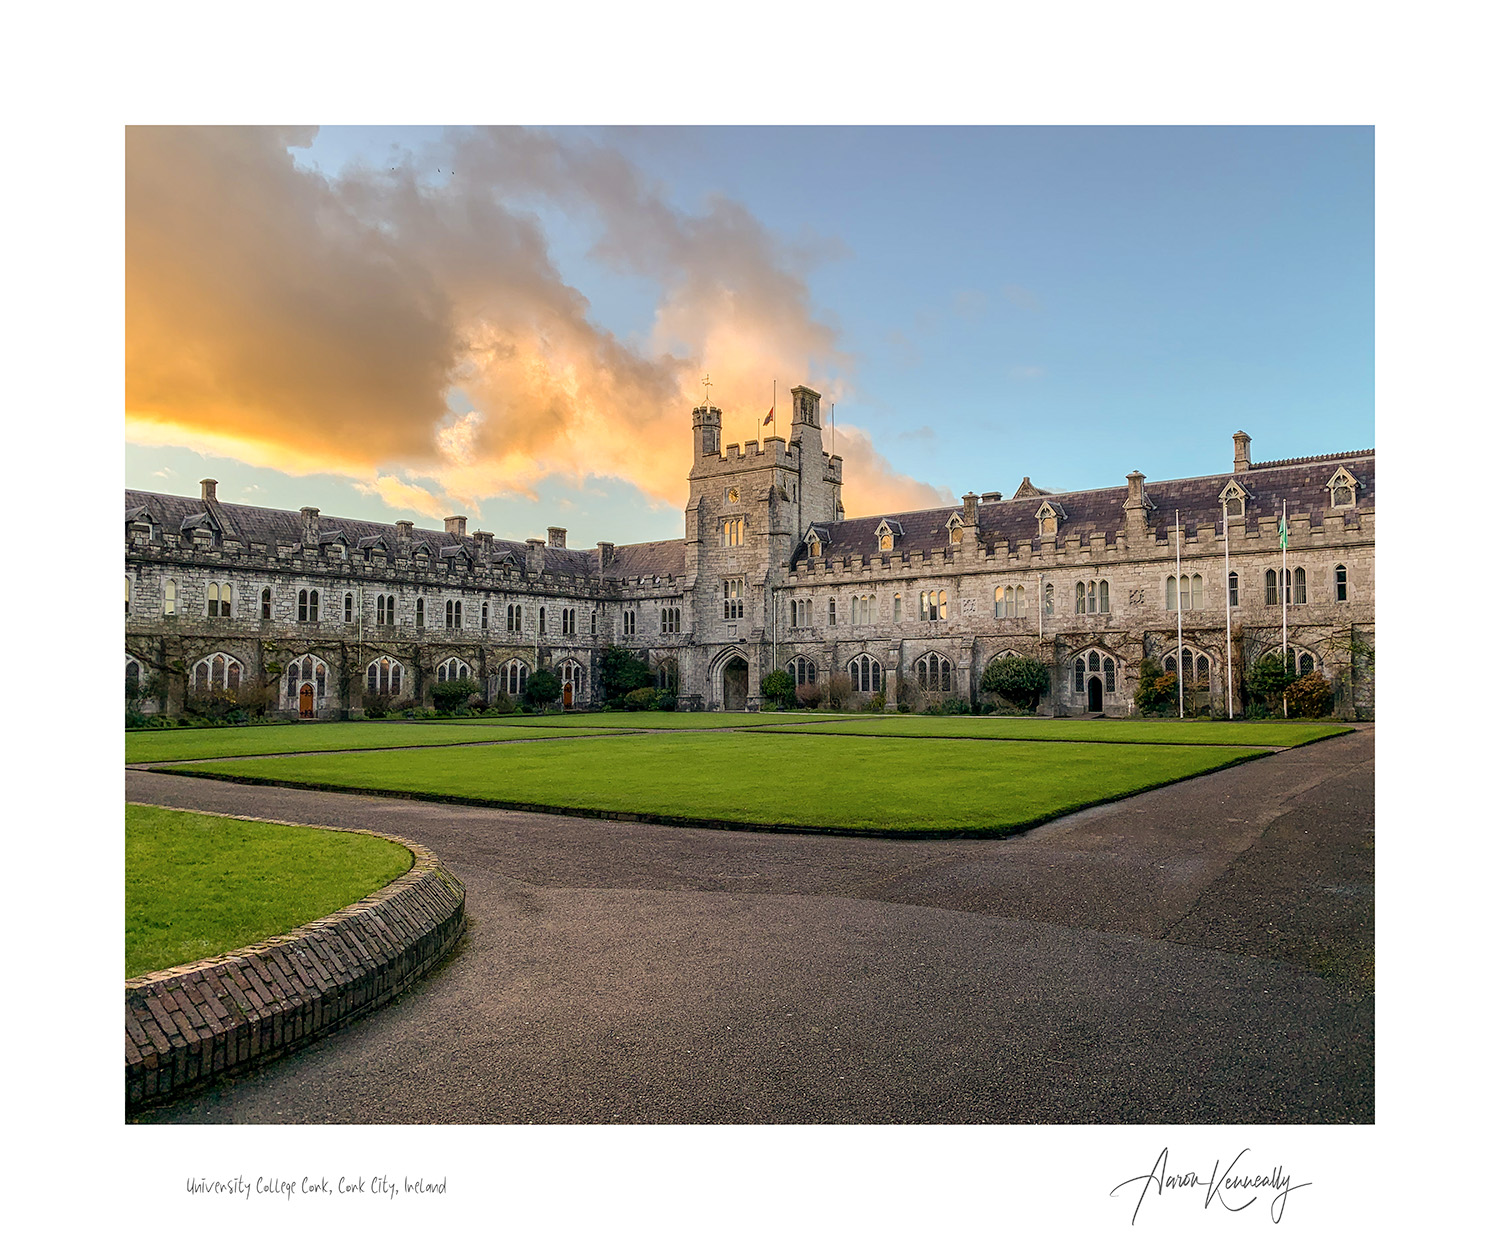 University College Cork, Cork City, Ireland